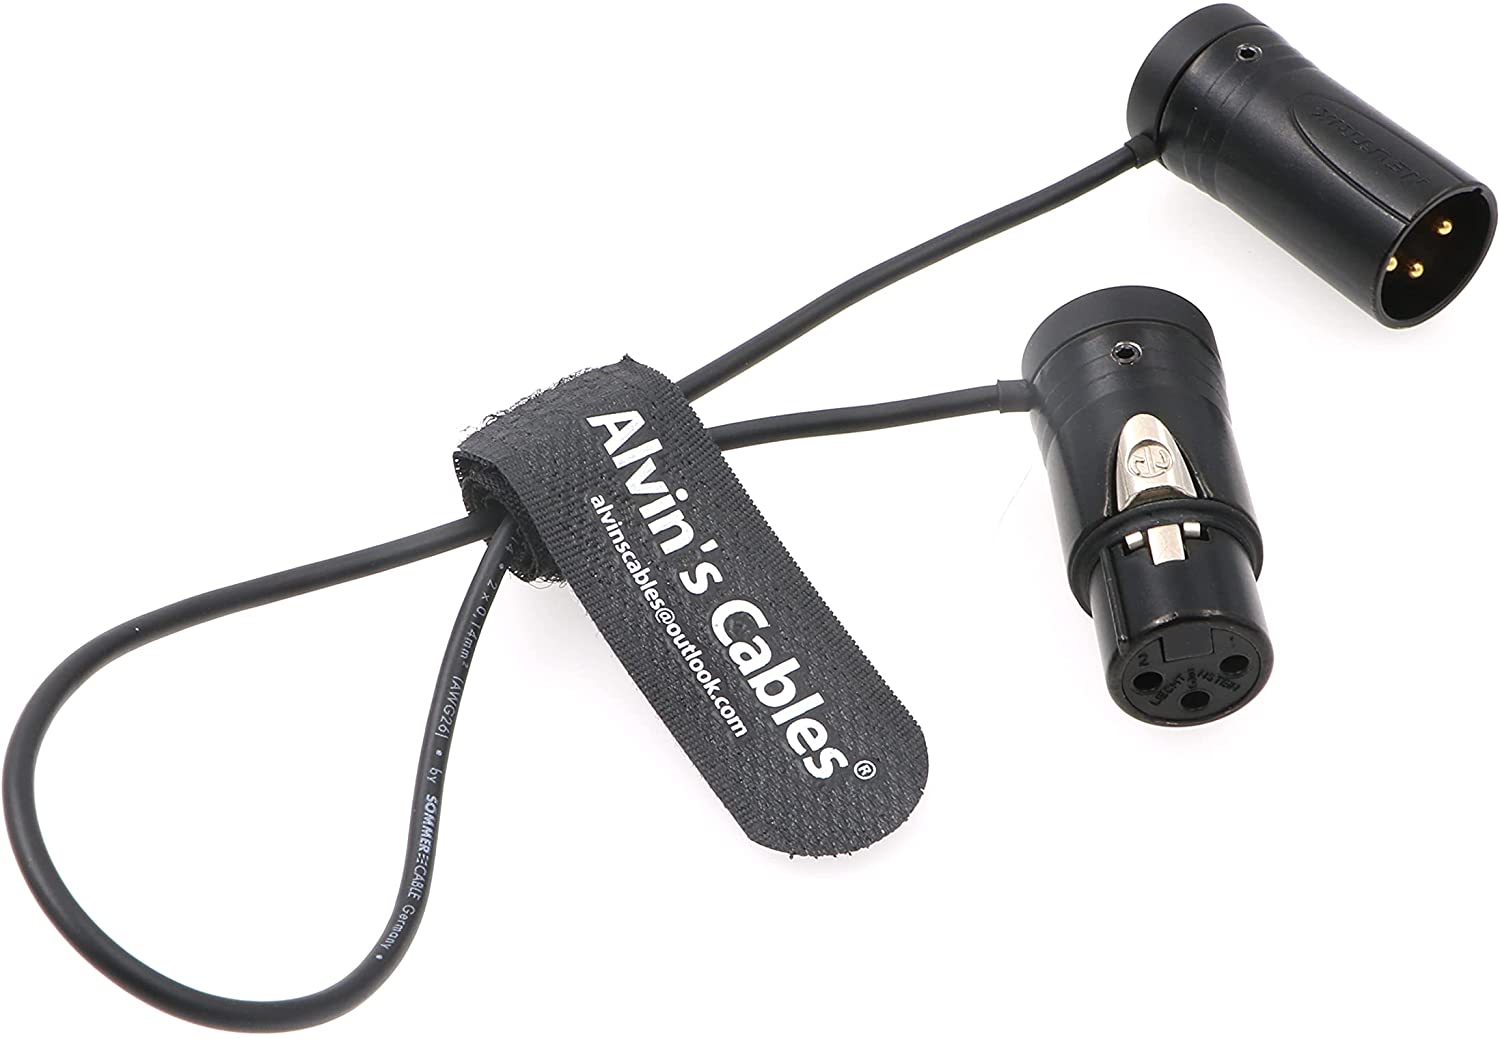 Low-Profile 3 Pin XLR Stecker auf Buchse Kabel Original Stecker Symmetrisches Mikrofon Audiokabel Sommer SOD-14 Alvin’s Cables